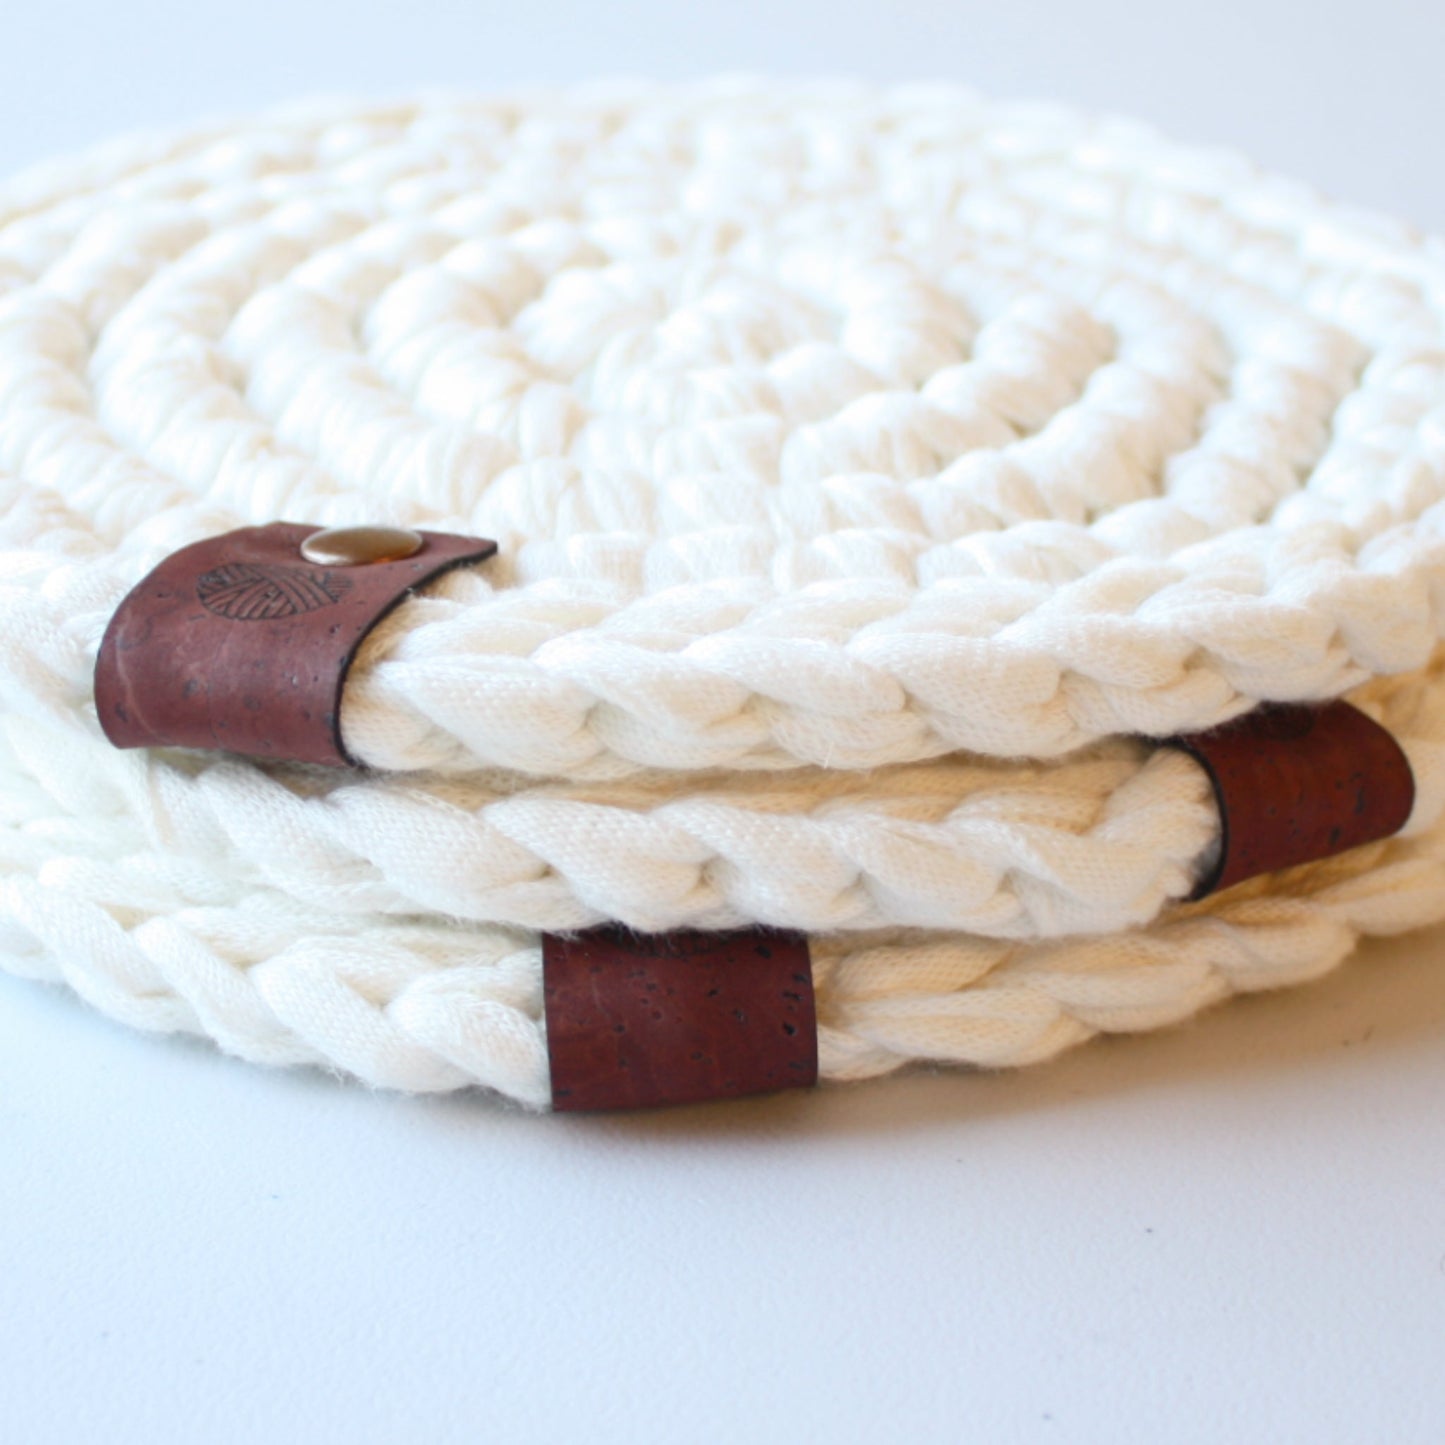 Handmade Potholder Trivets - Made in the USA